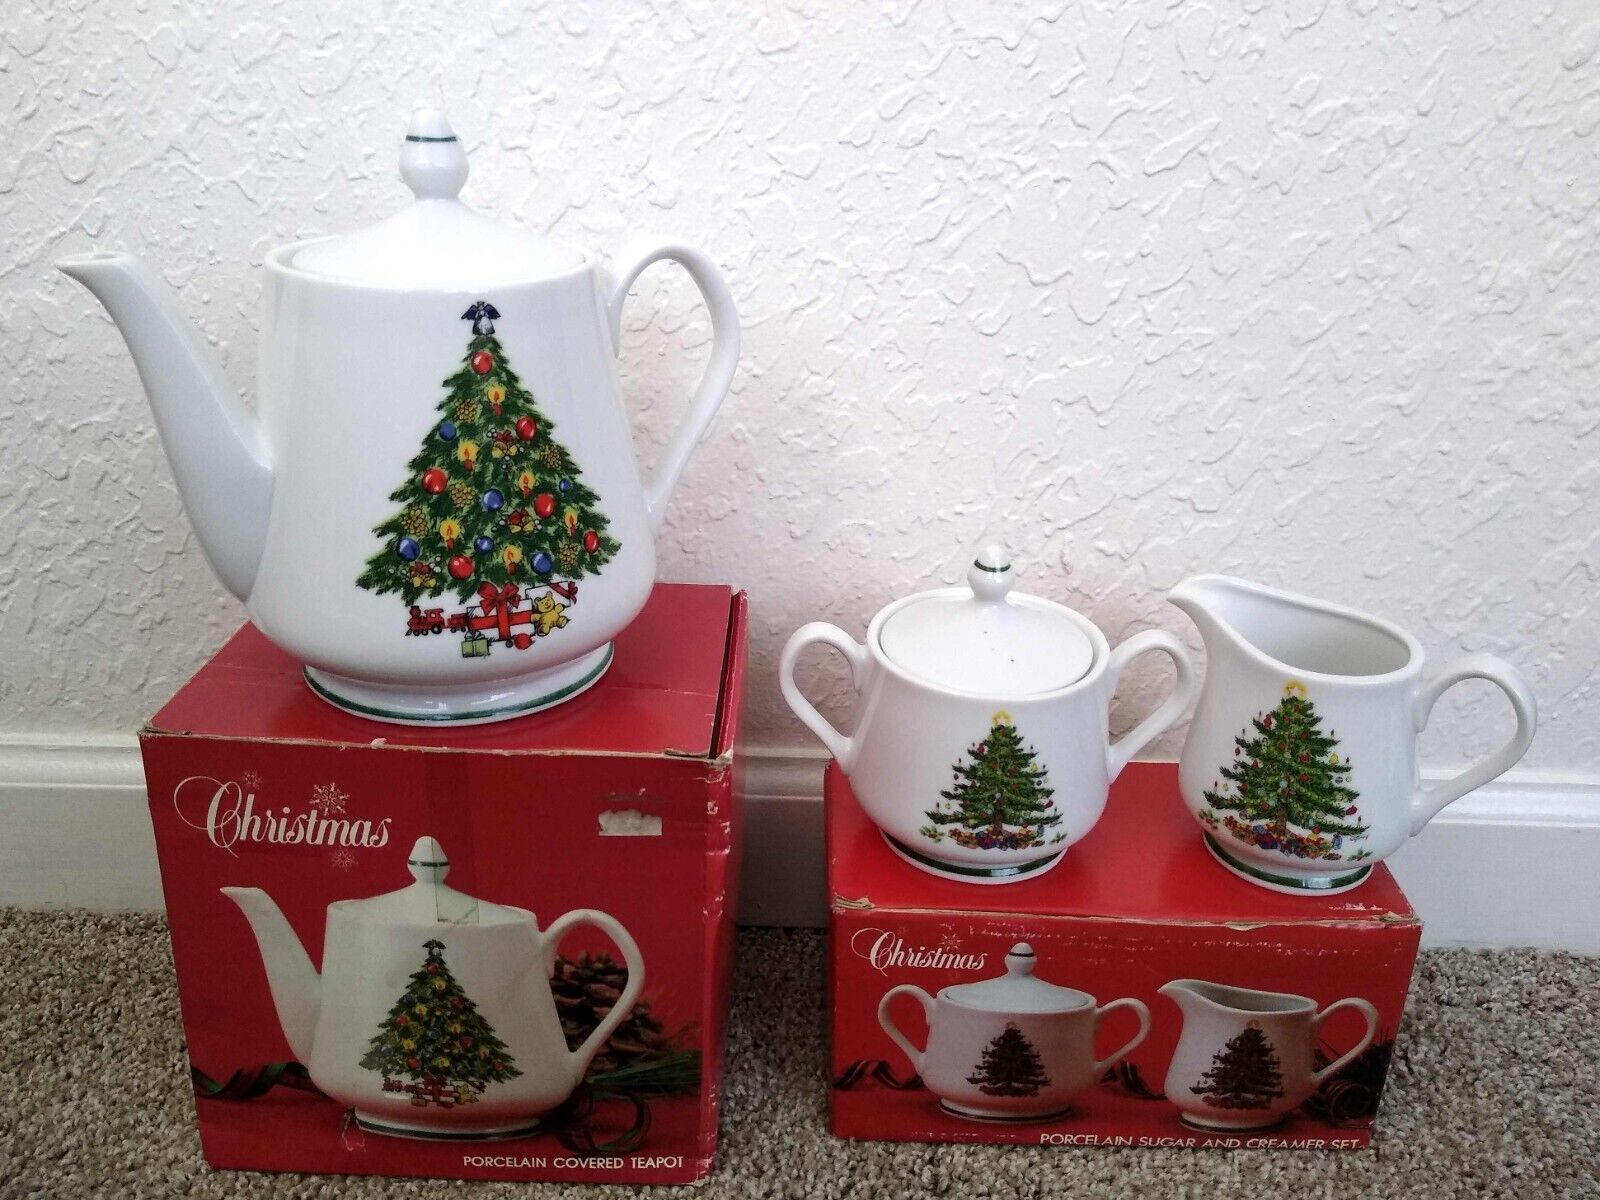 Christmas Tree Porcelain Covered Teapot, Cream & Sugar Set - Made in Japan